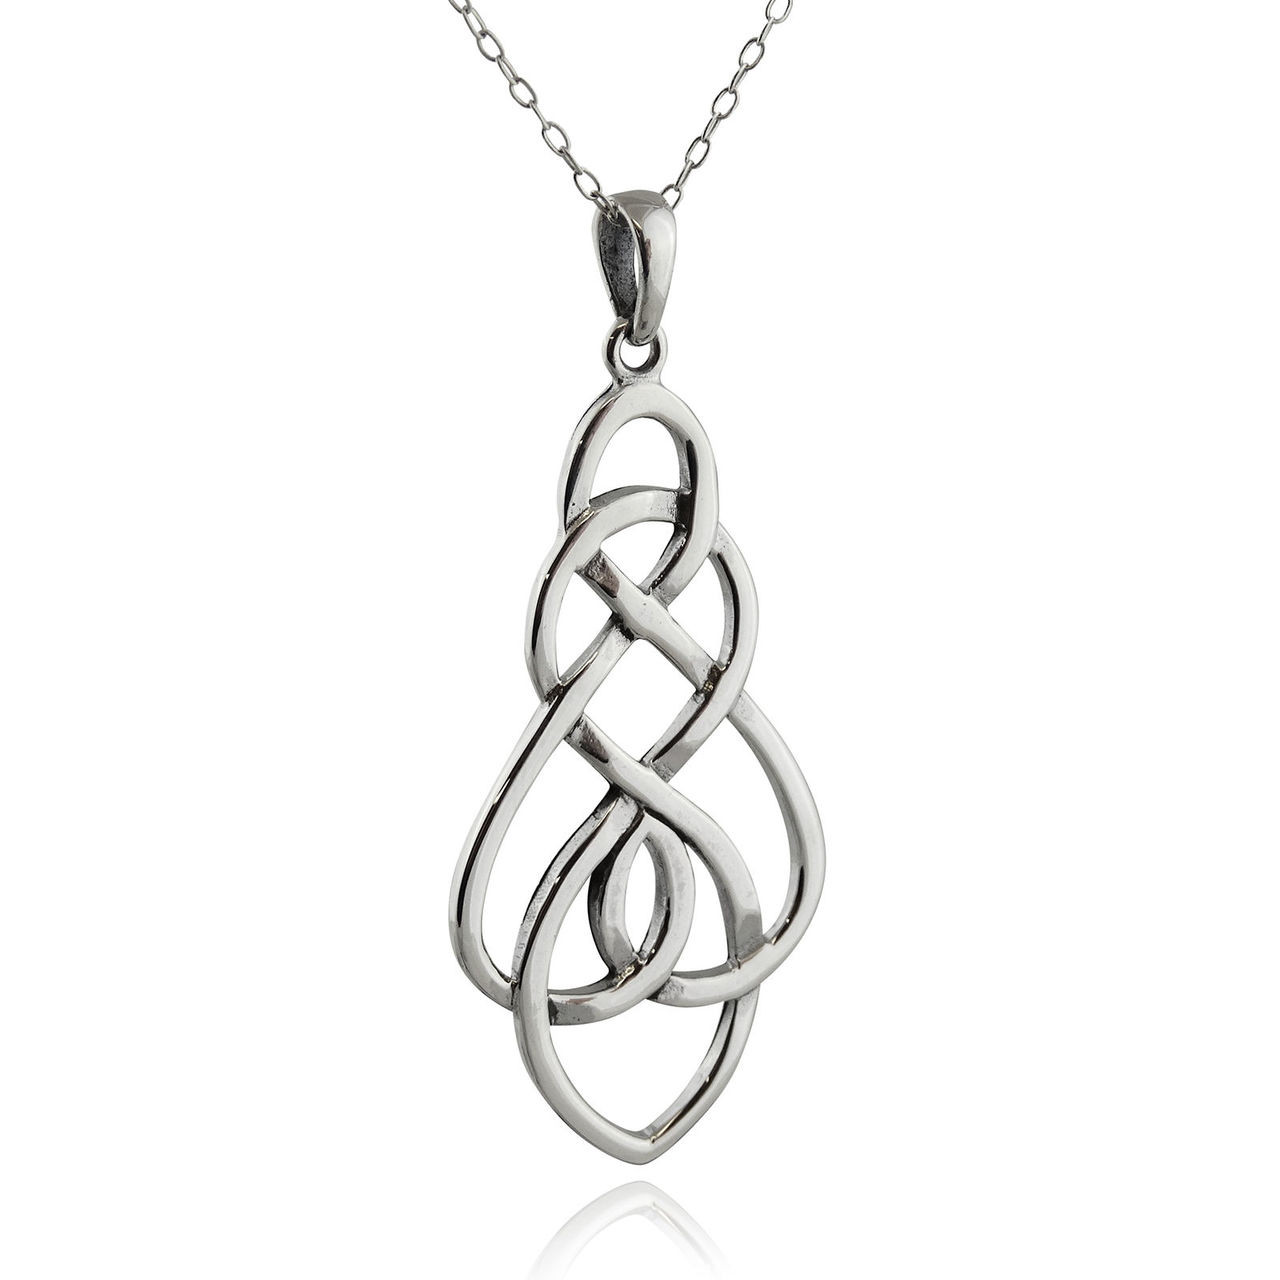 Celtic Knot Symbol Necklace - 925 Sterling Silver - FashionJunkie4Life